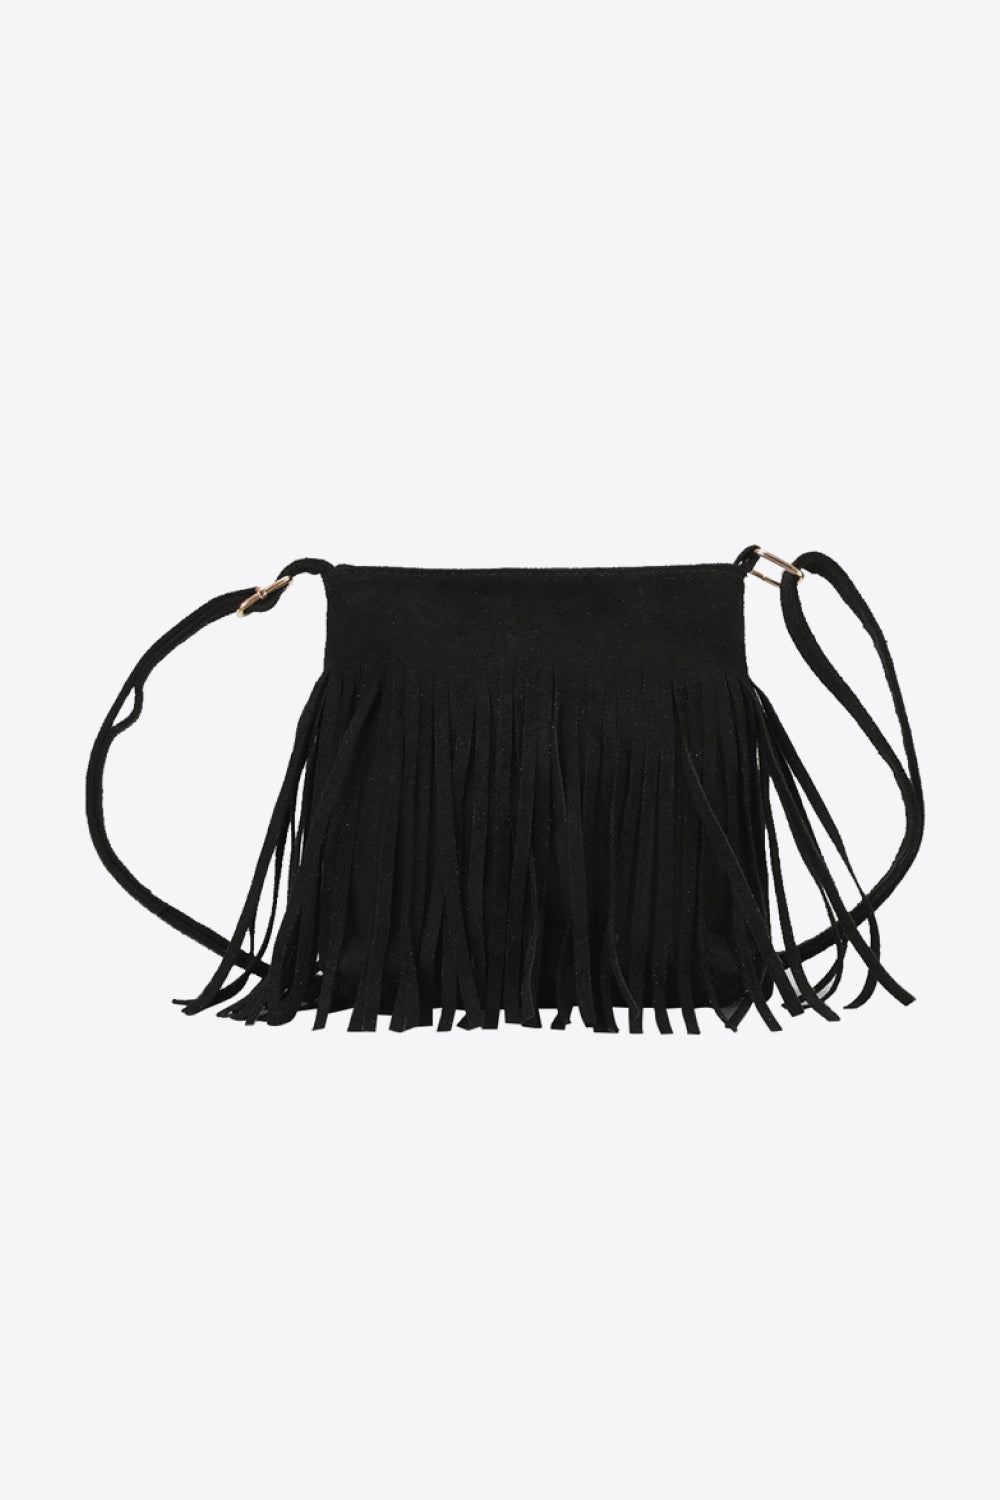 Black Adored PU Leather Crossbody Bag with Fringe Handbags